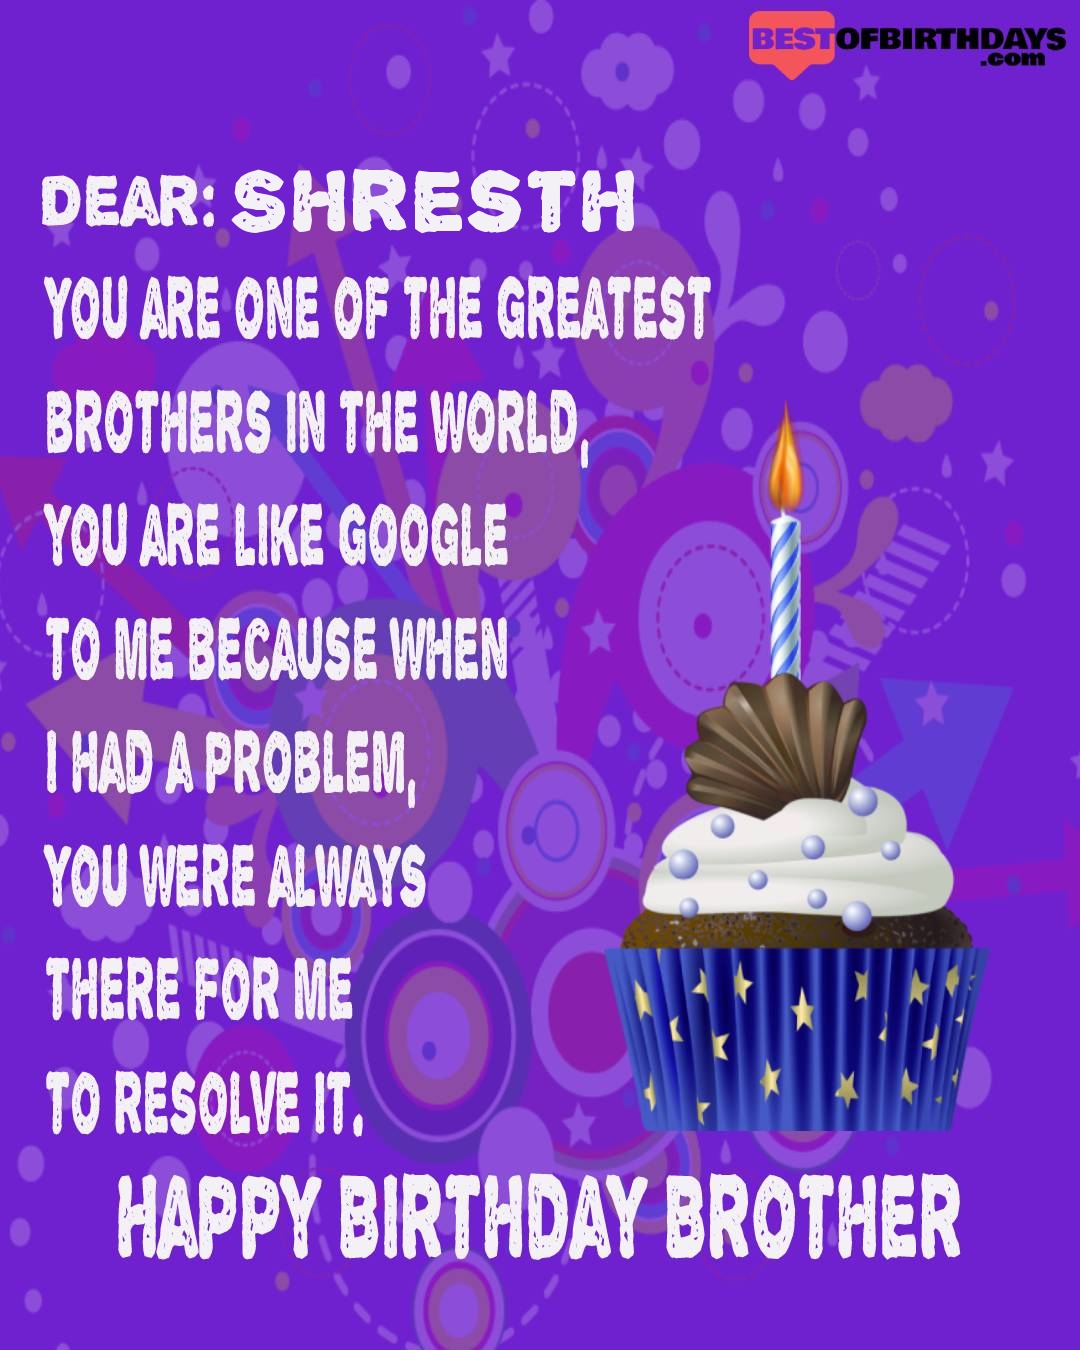 Happy birthday shresth bhai brother bro